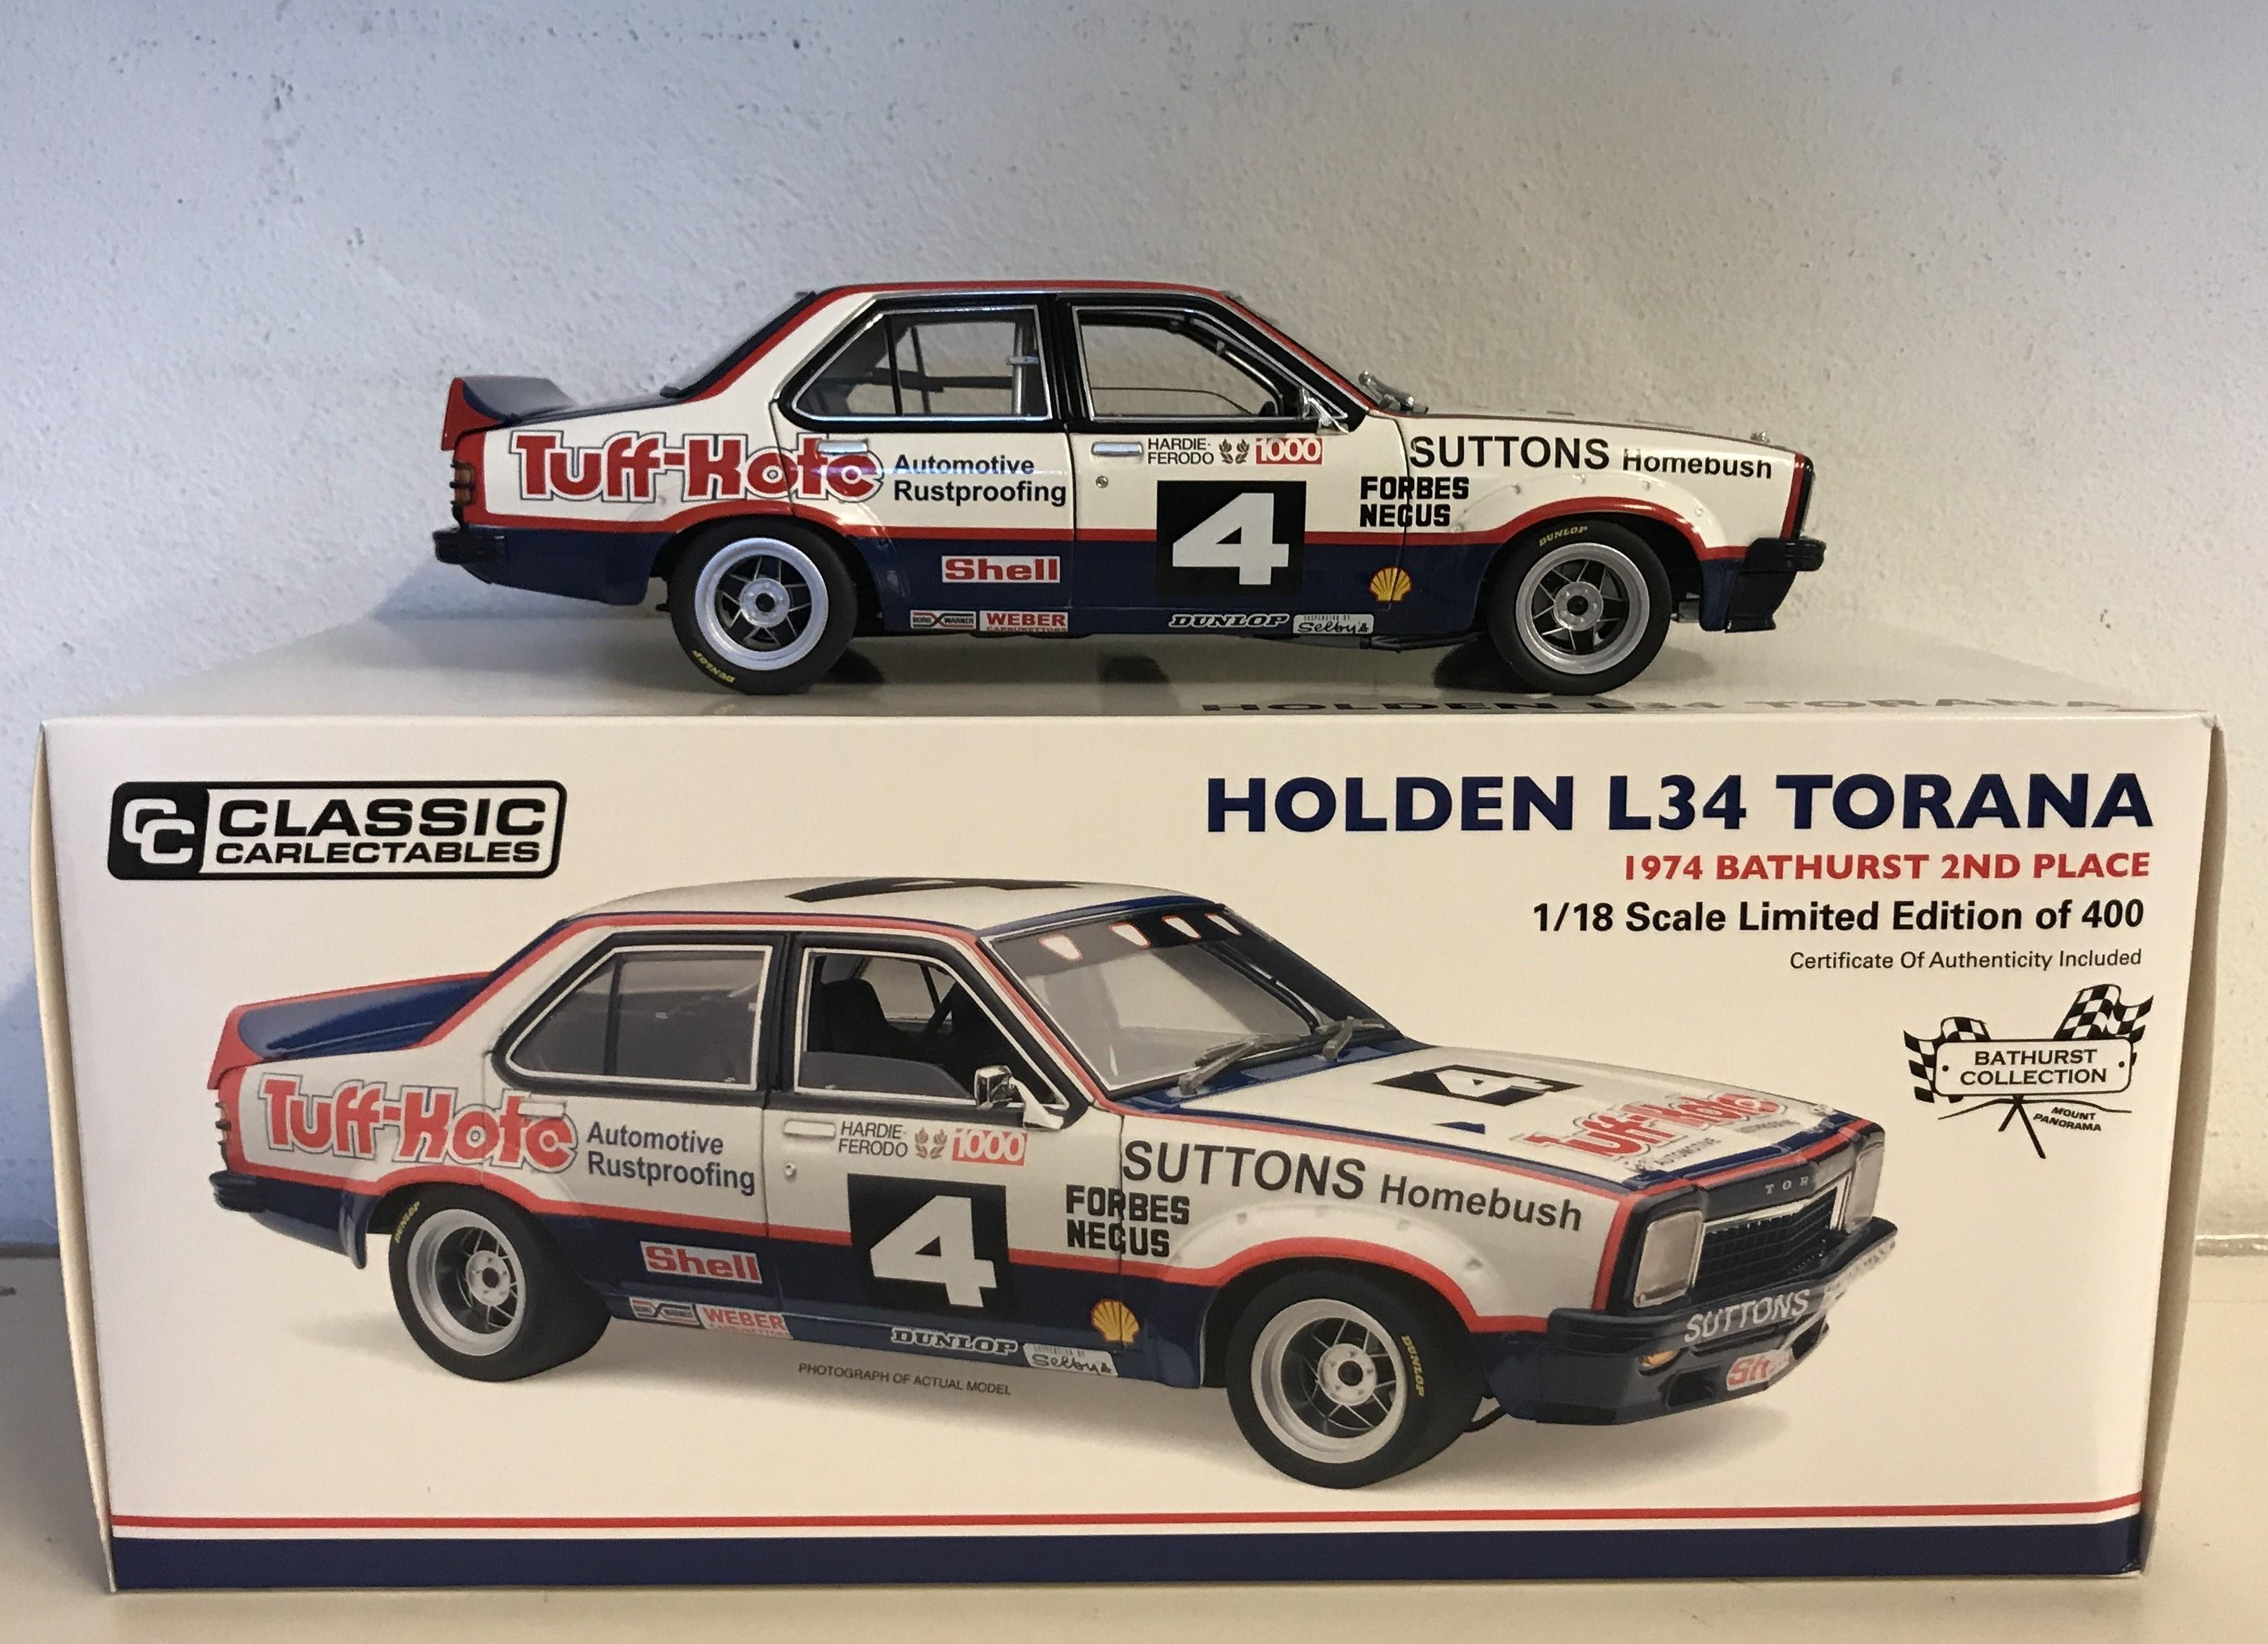 https://guystuff.com.au/model-cars/in-store-now/holden-l34-torana-1974-bathurst-2nd-place-1-18-scale-model-car.html